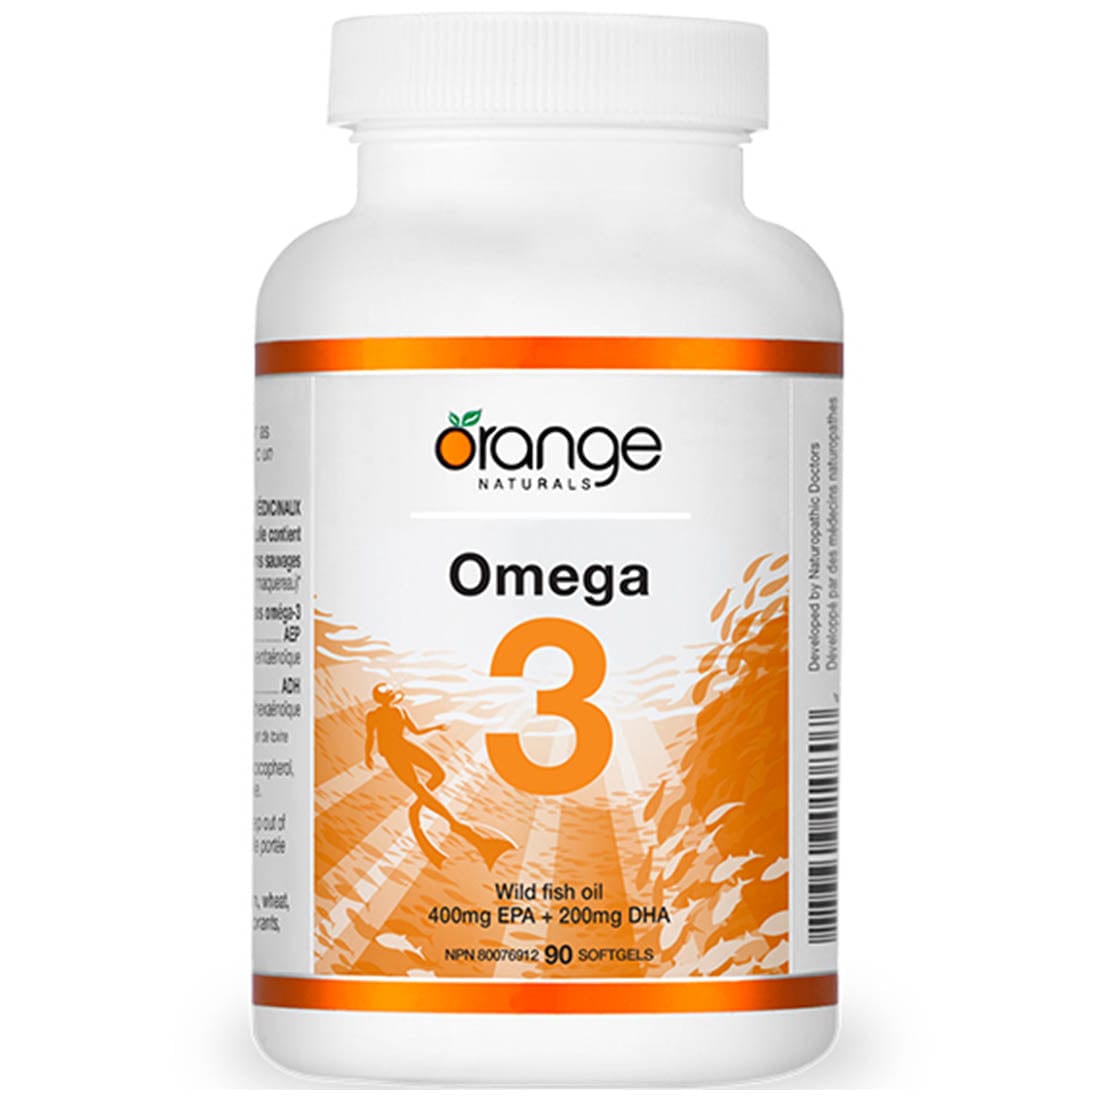 Orange Naturals Omega-3 Fish Oil Softgel, 90 Softgels